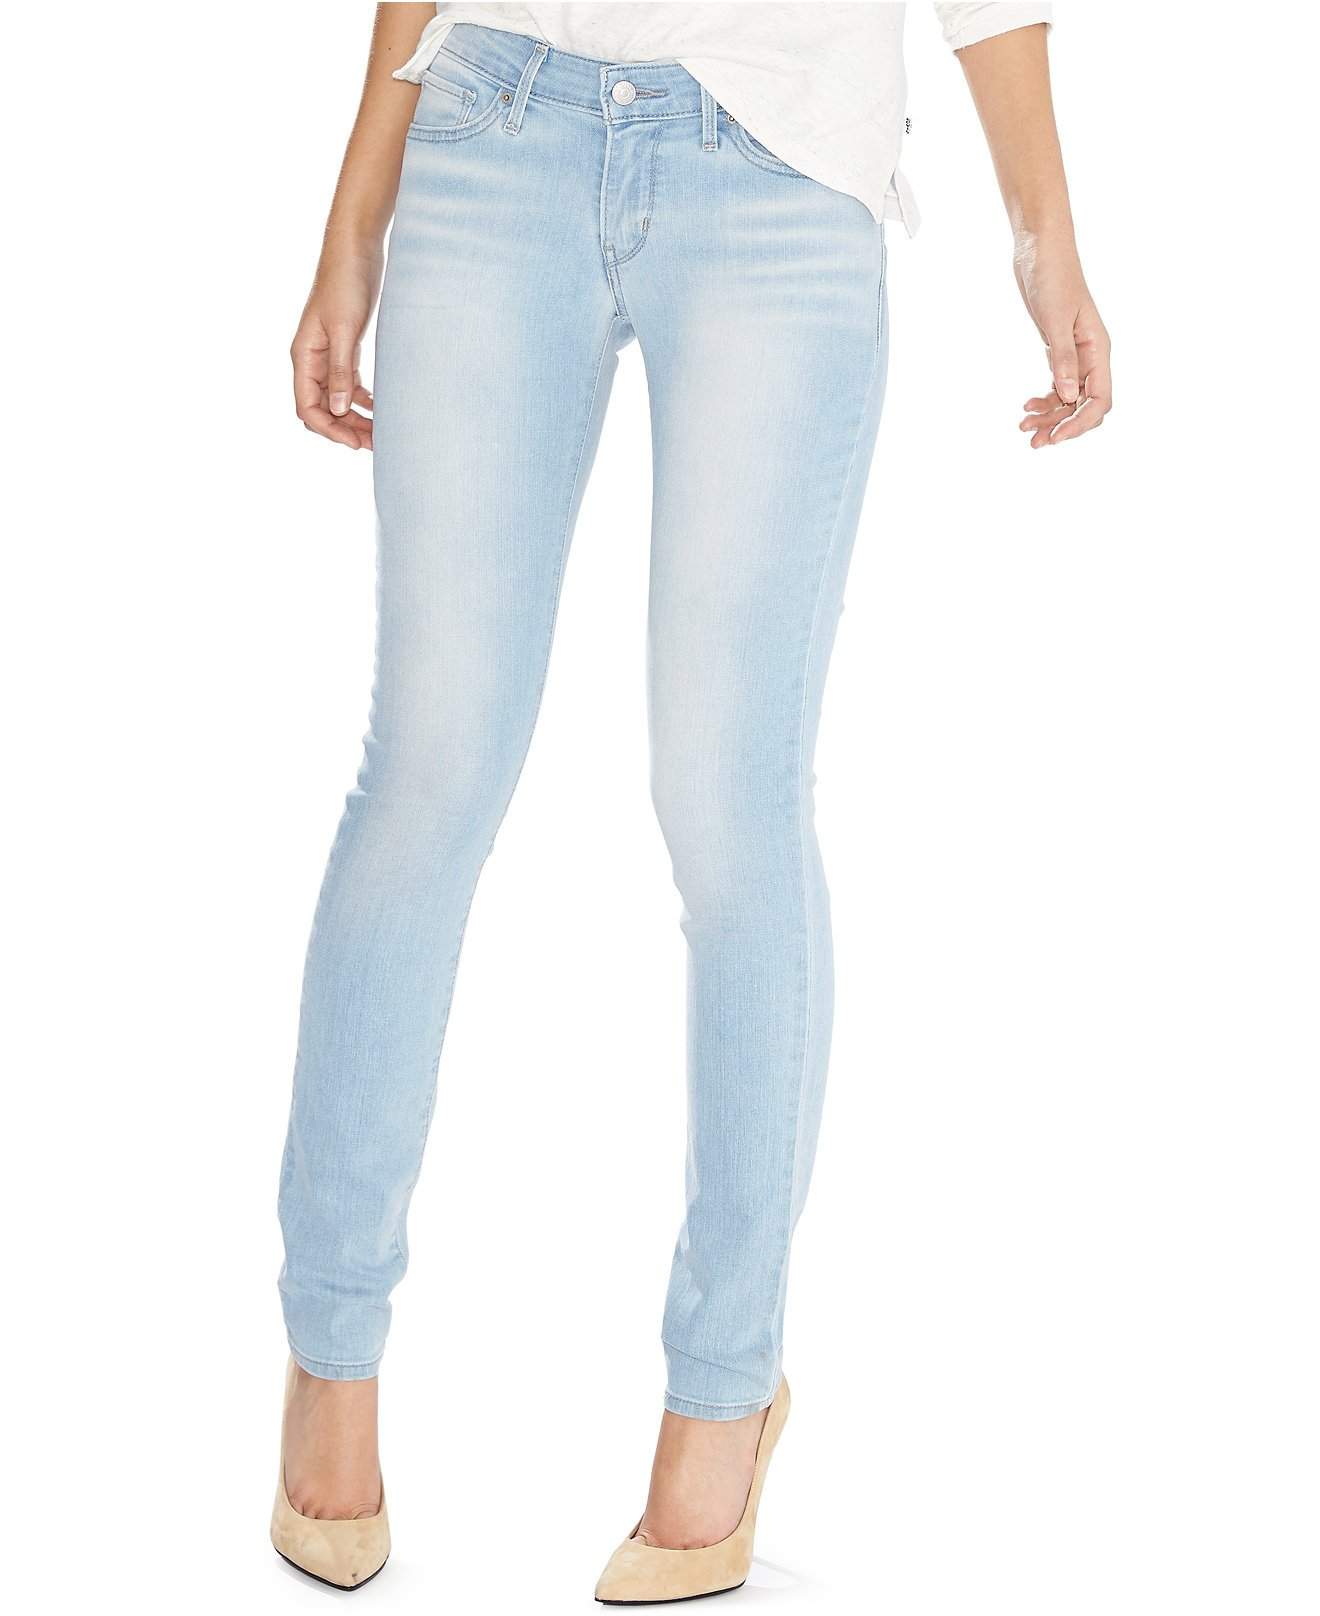 levi's 811 curvy jeans